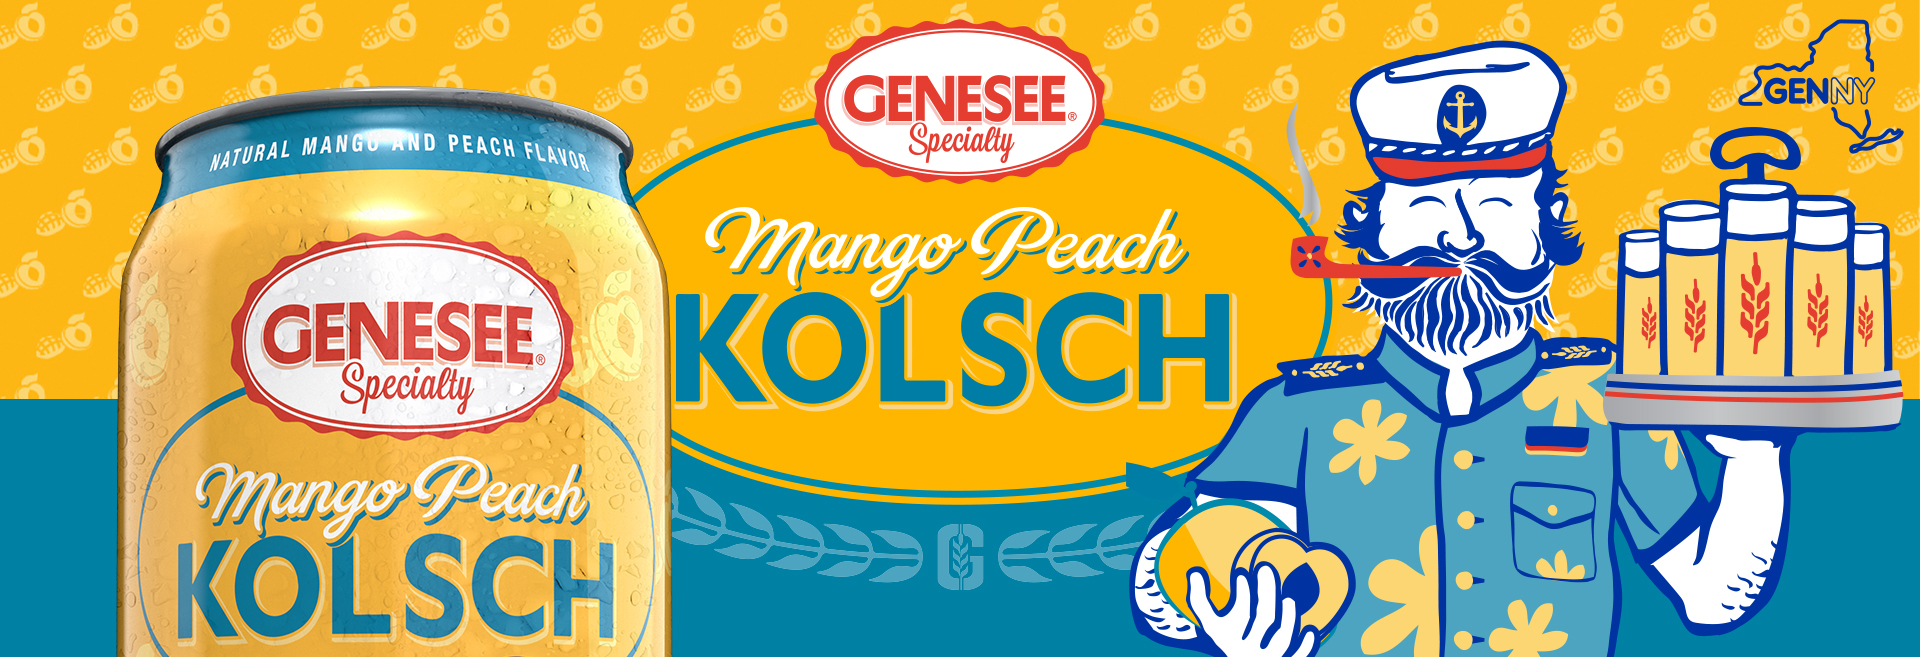 Genesee Mango Peach Kolsch!